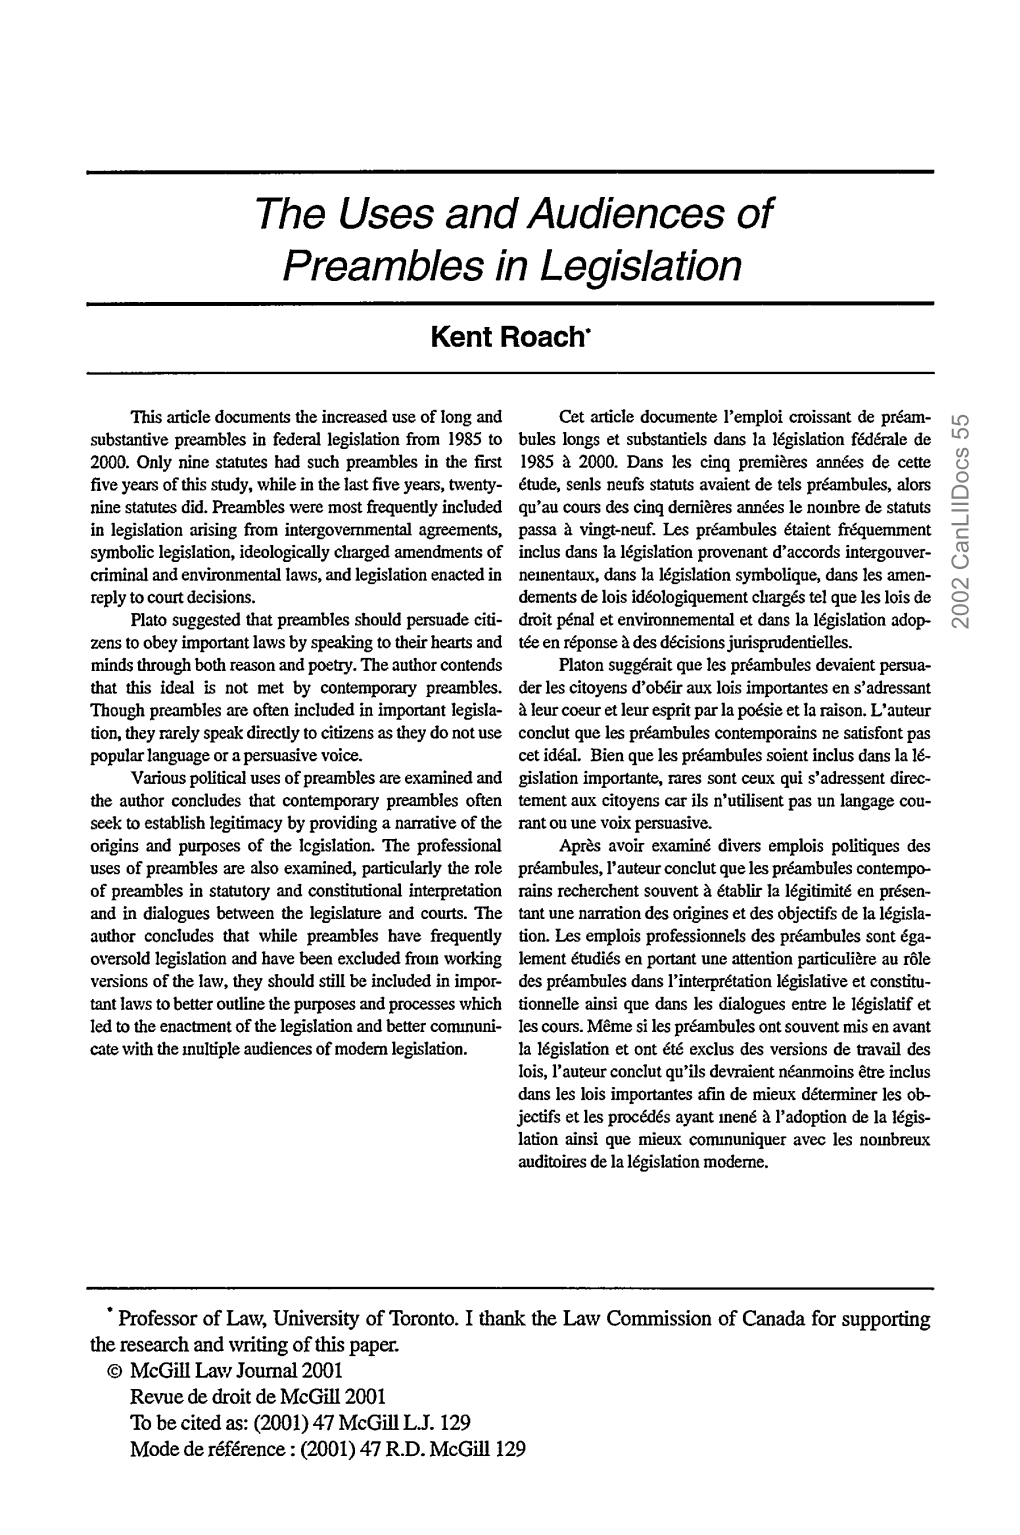 Preambles in Legislation